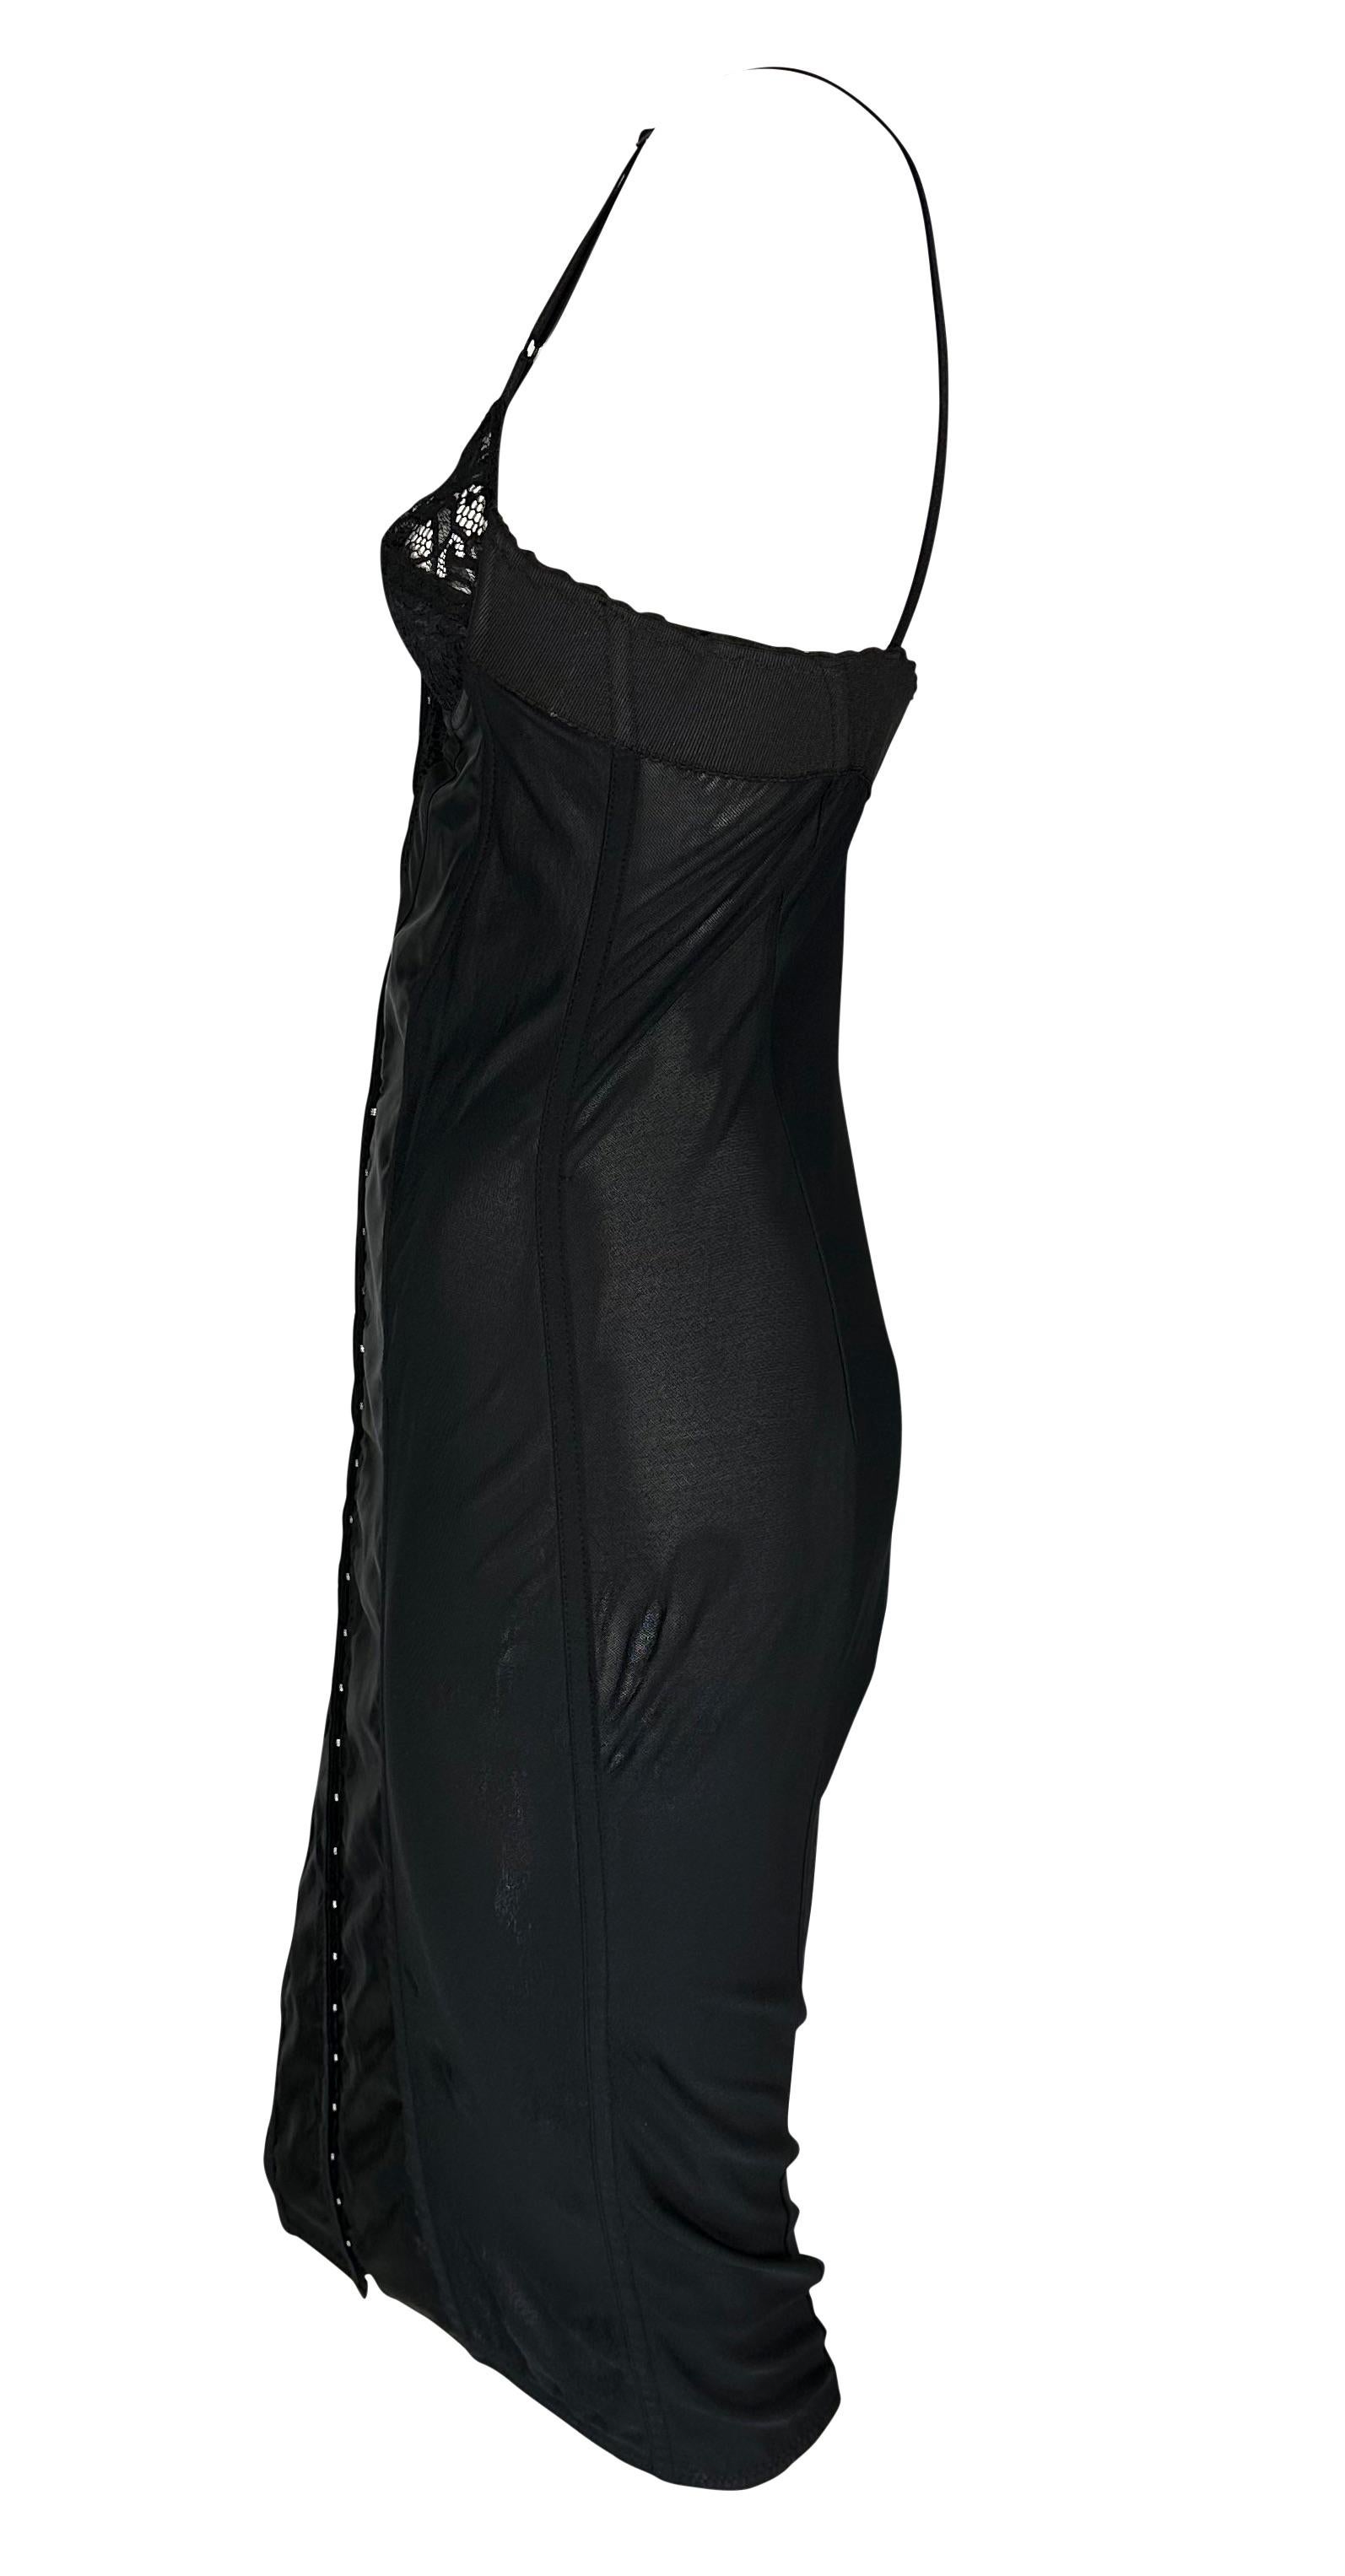 Women's S/S 2003 Dolce & Gabbana 'Sex & Love' Runway Sheer Bustier Black Dress For Sale